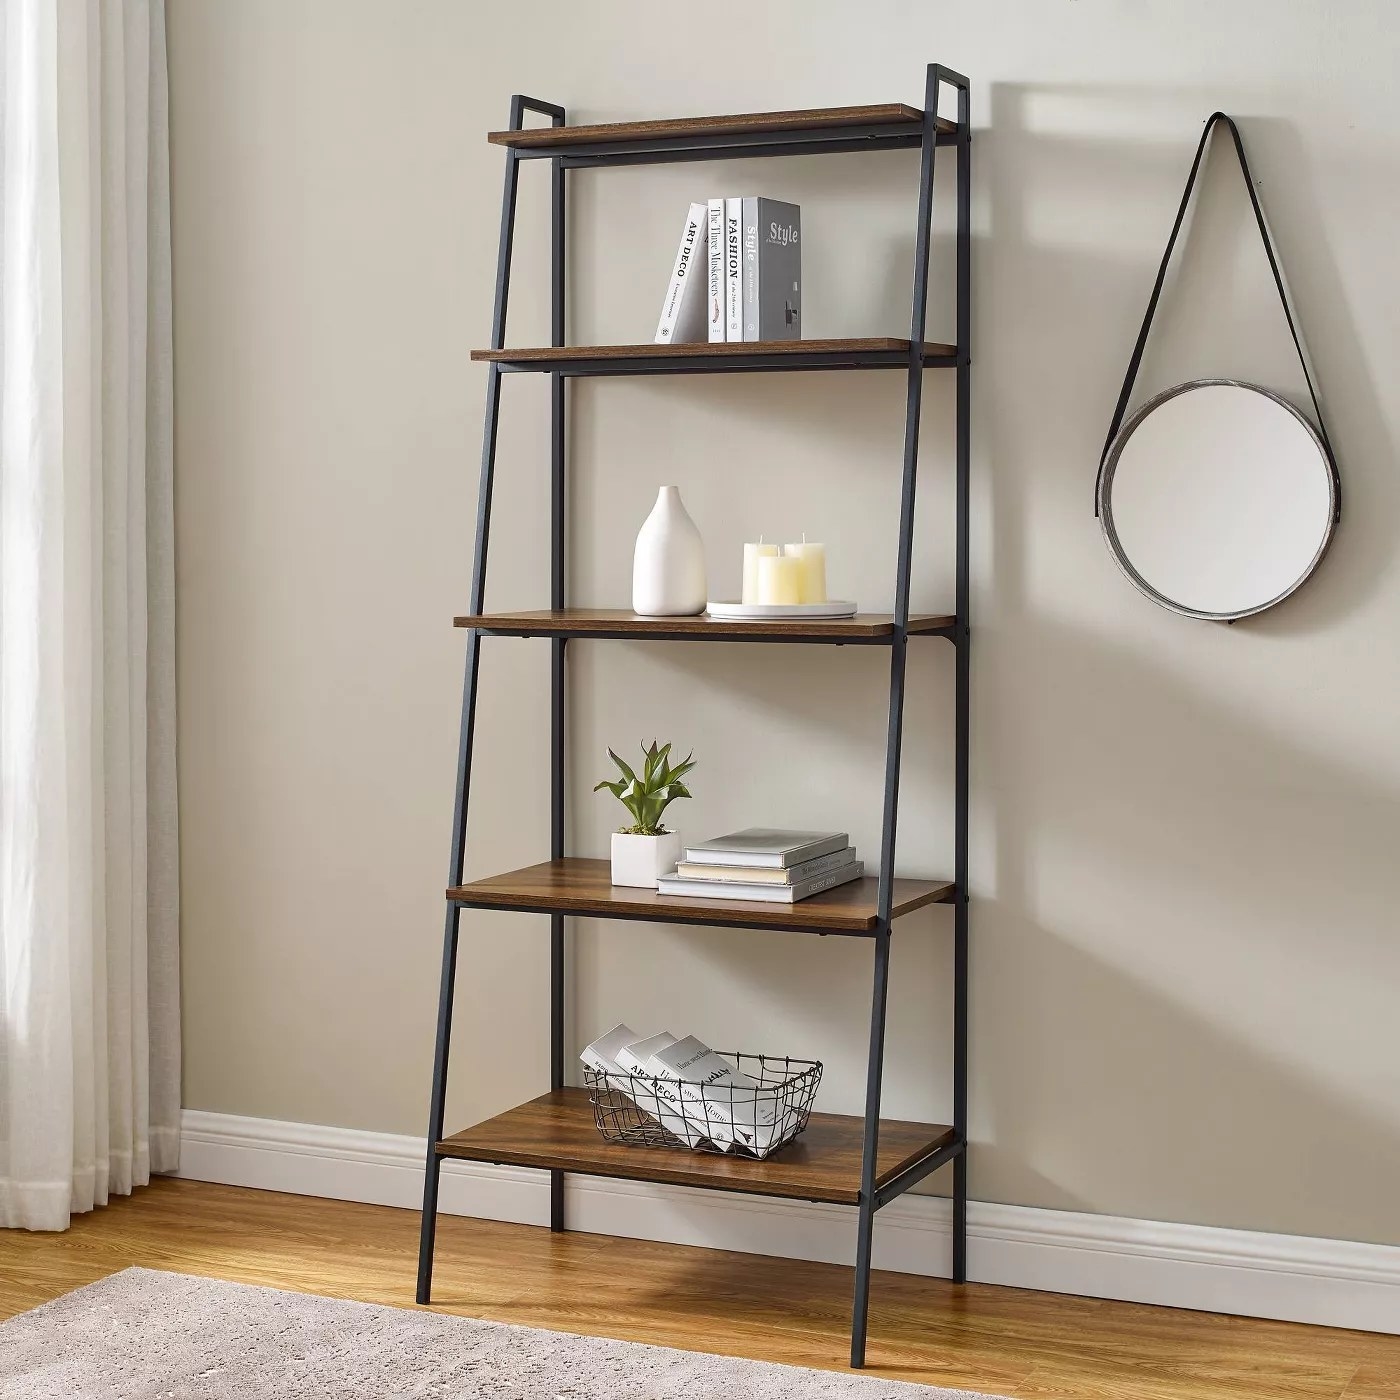 The ladder bookshelf